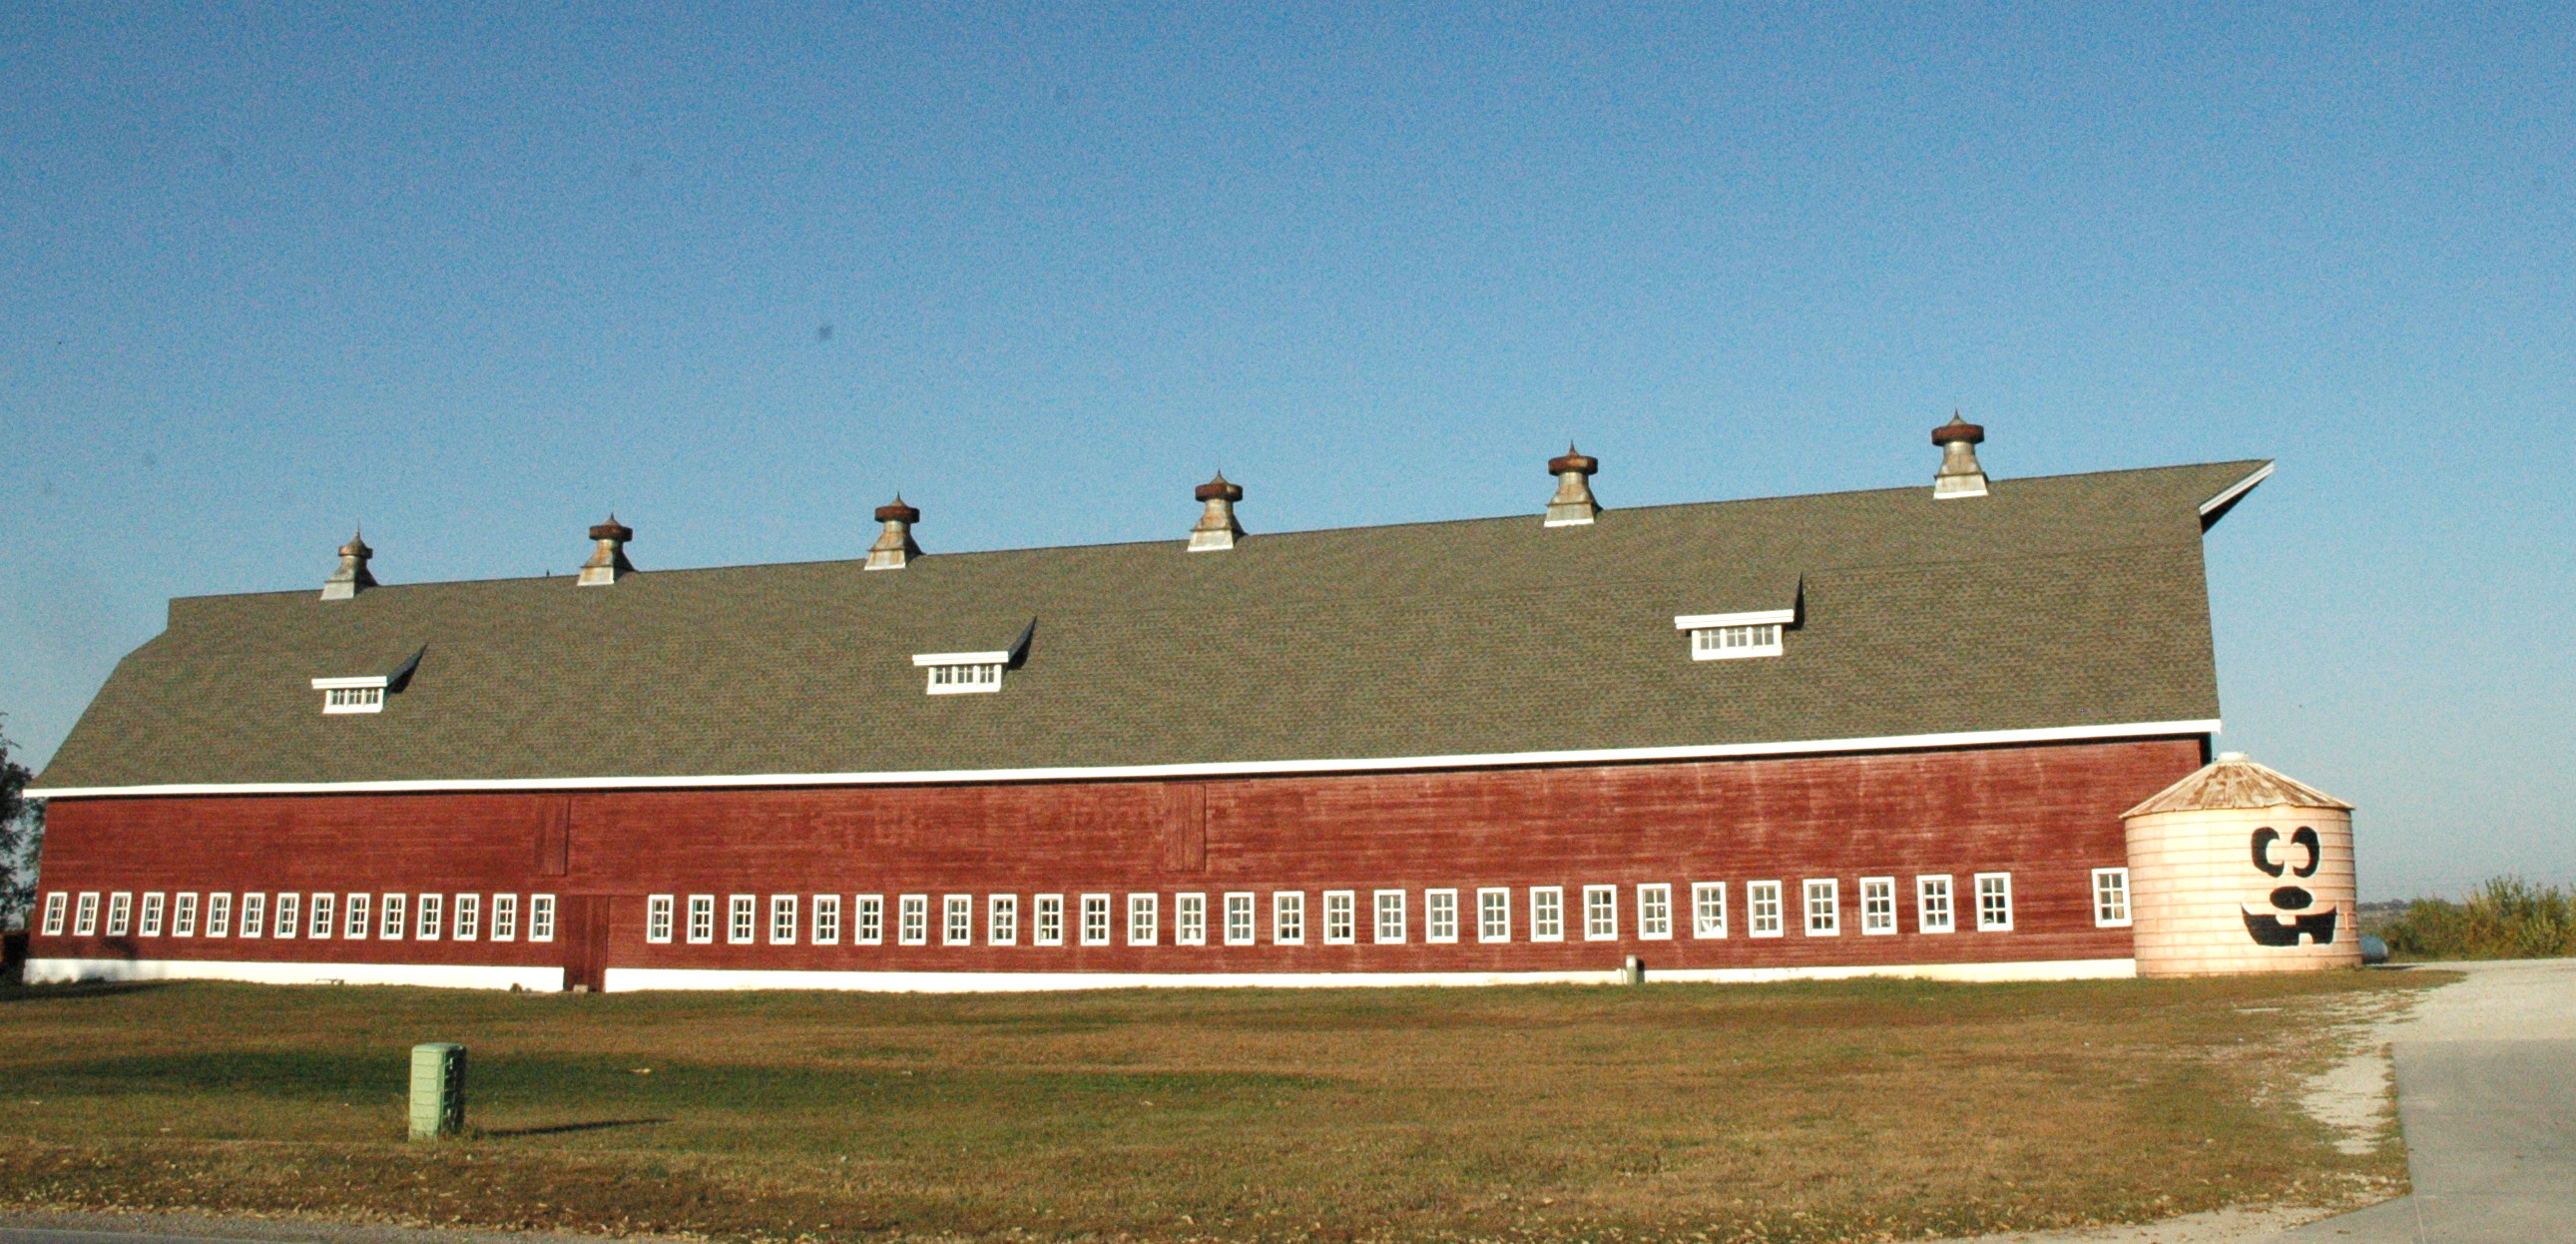 File:Ackerhurst-Dairy-Barn-Omaha-NE.jpg - Wikimedia Commons